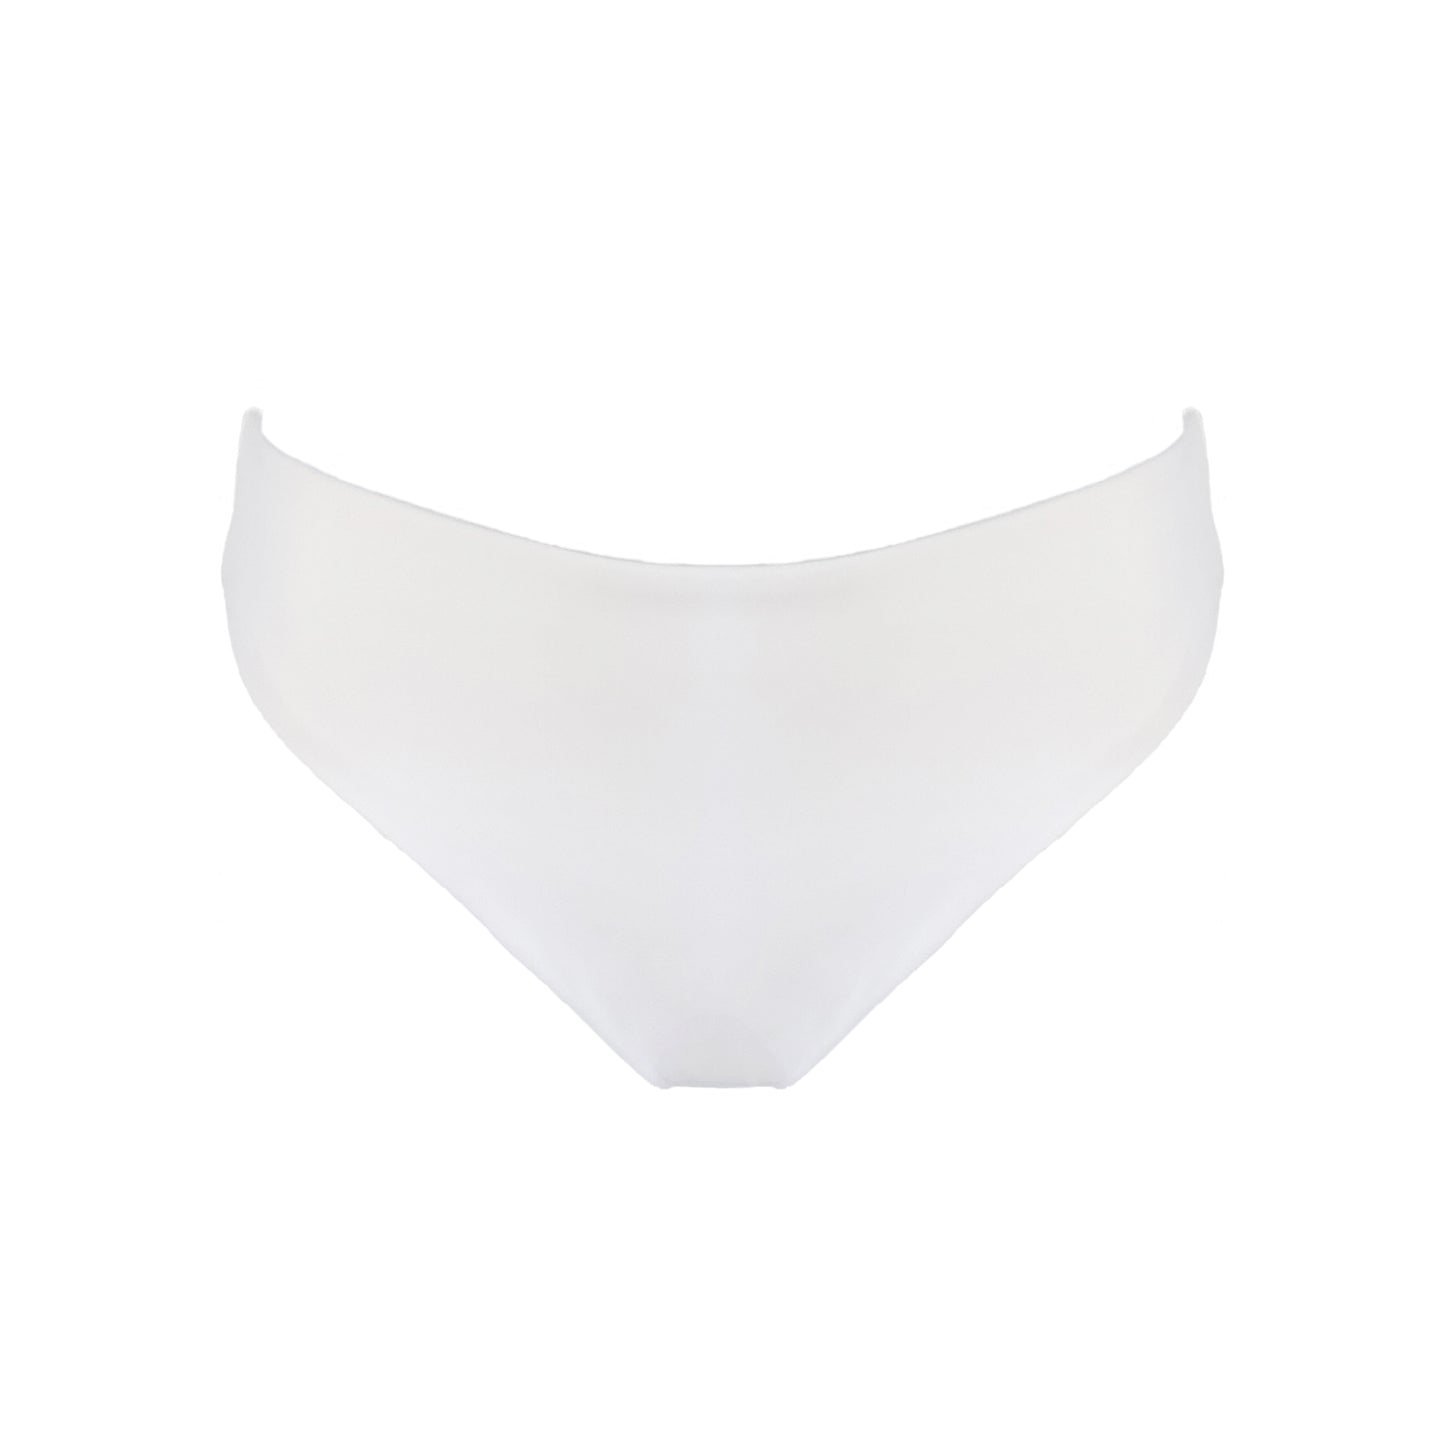 White high waist cheeky bikini bottom with high cut legs, shapewear benefits, and full bum coverage.